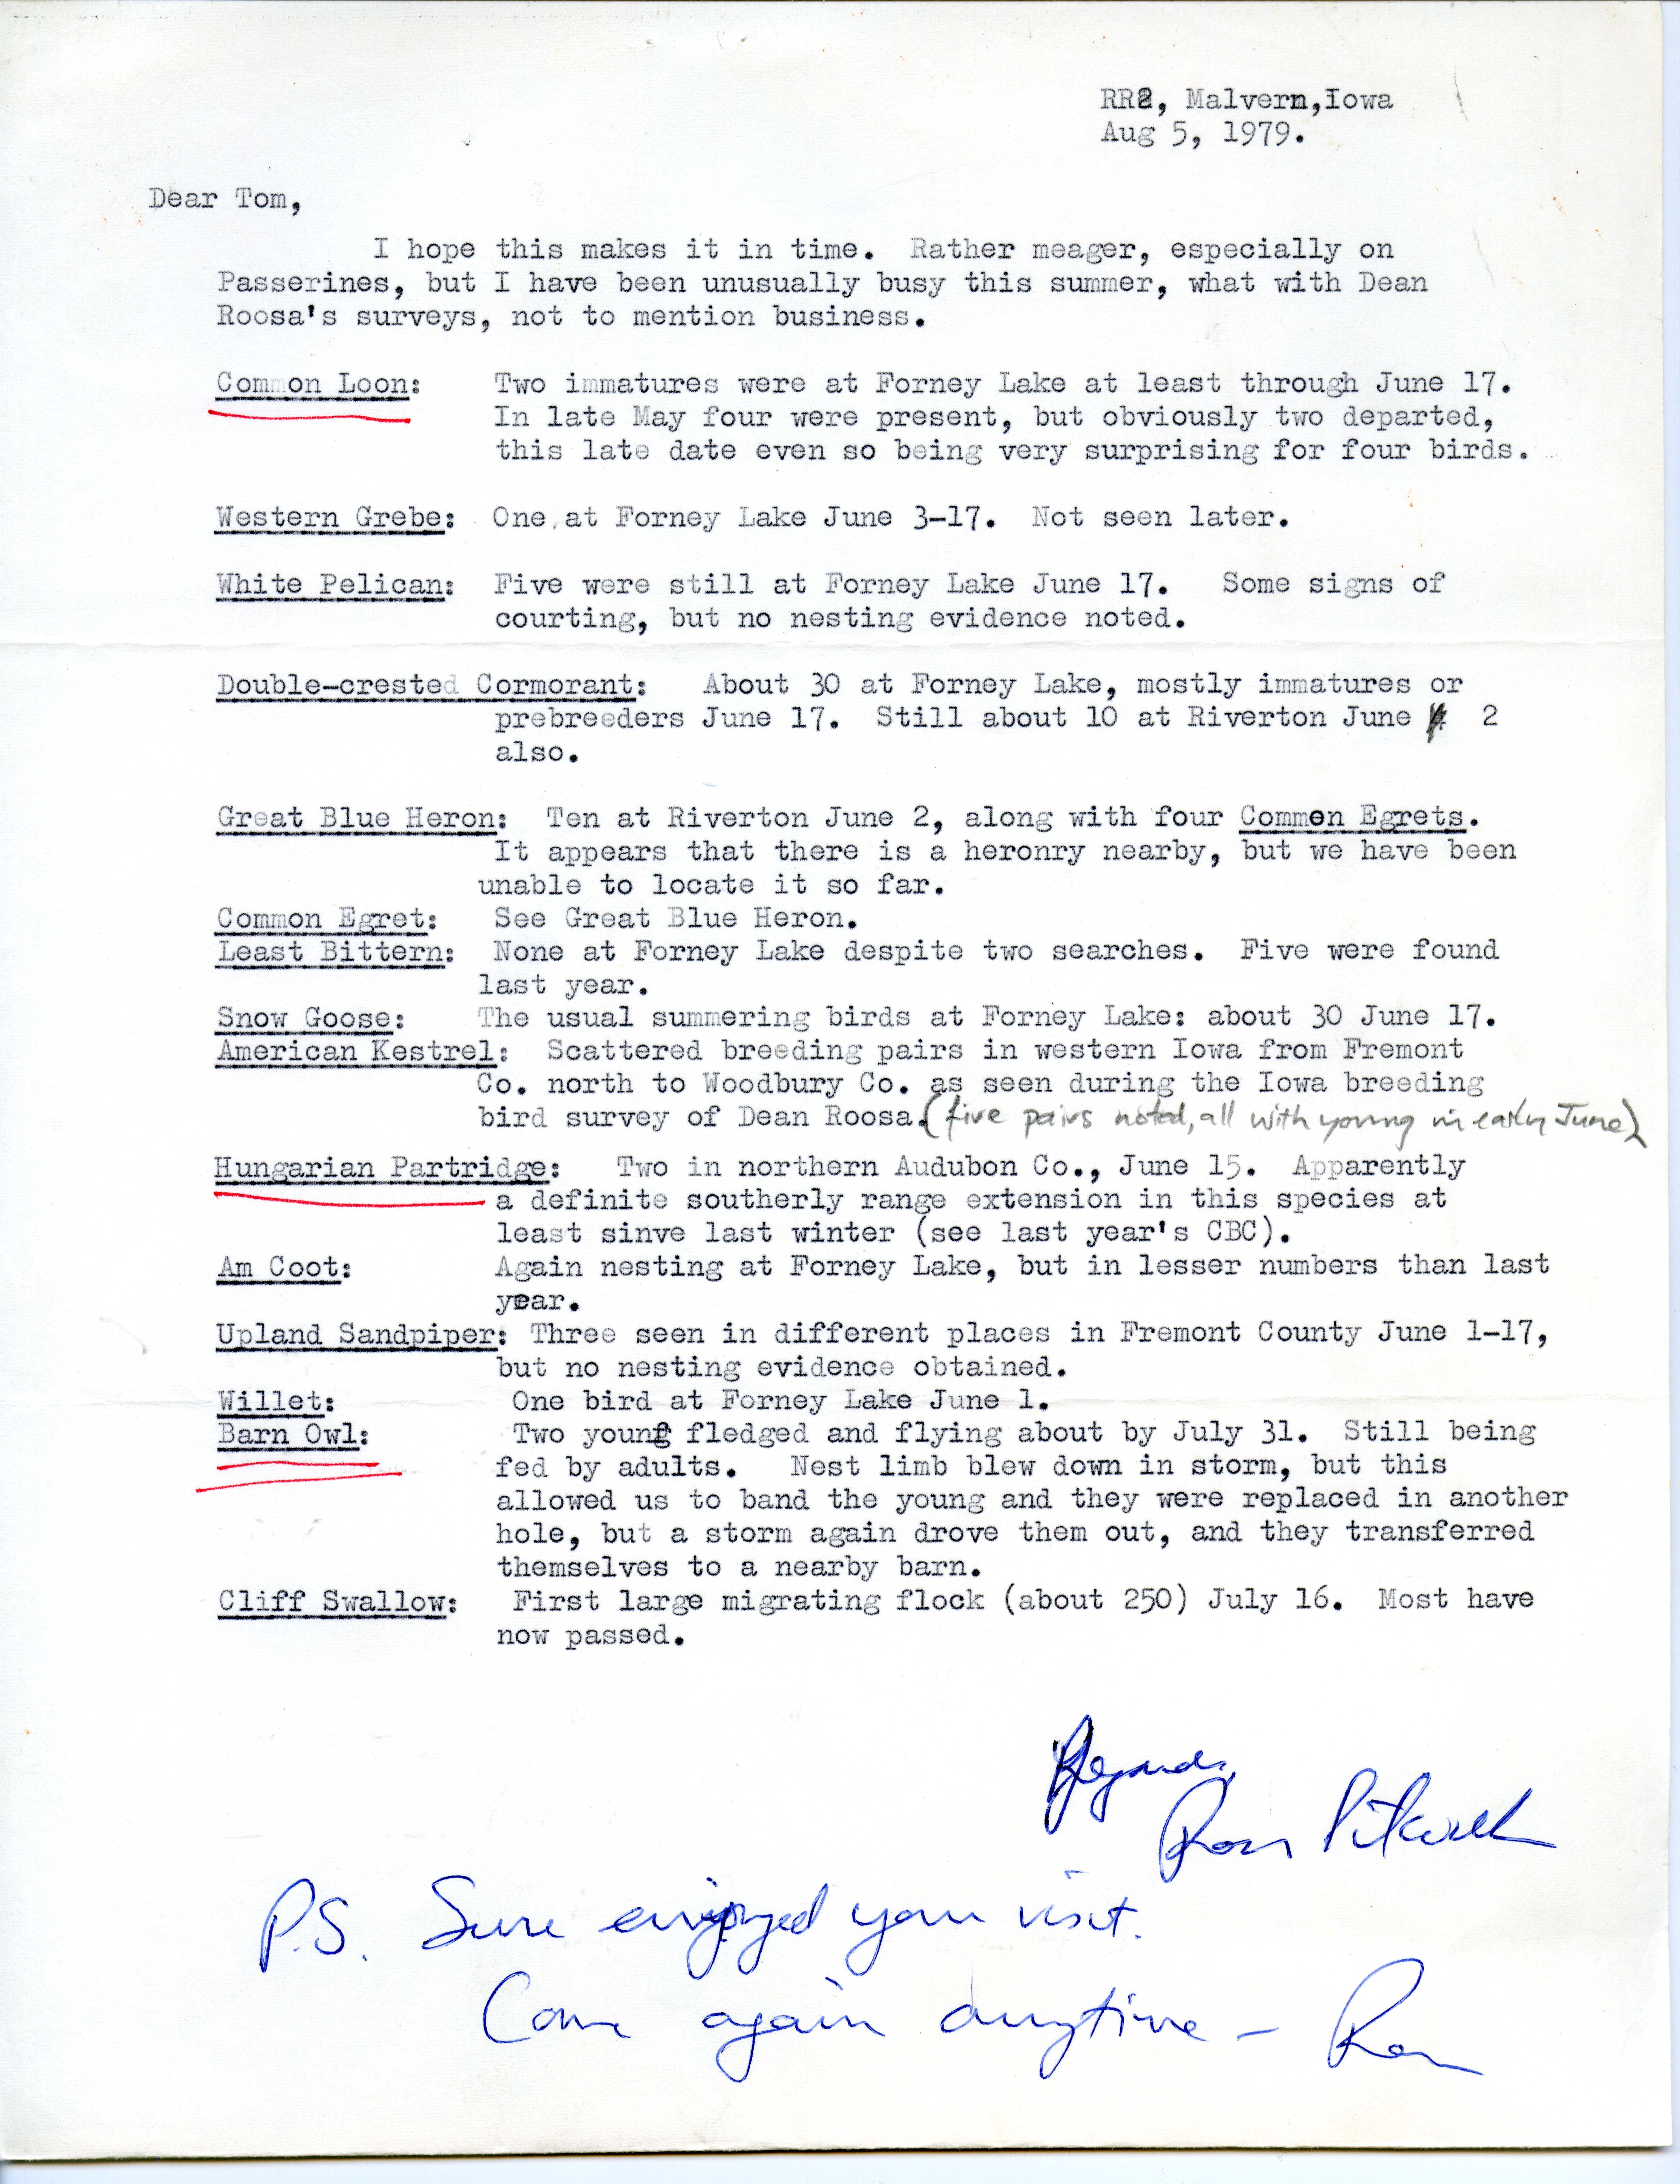 Ross Silcock letter to Thomas H. Kent regarding bird sightings, August 5, 1979